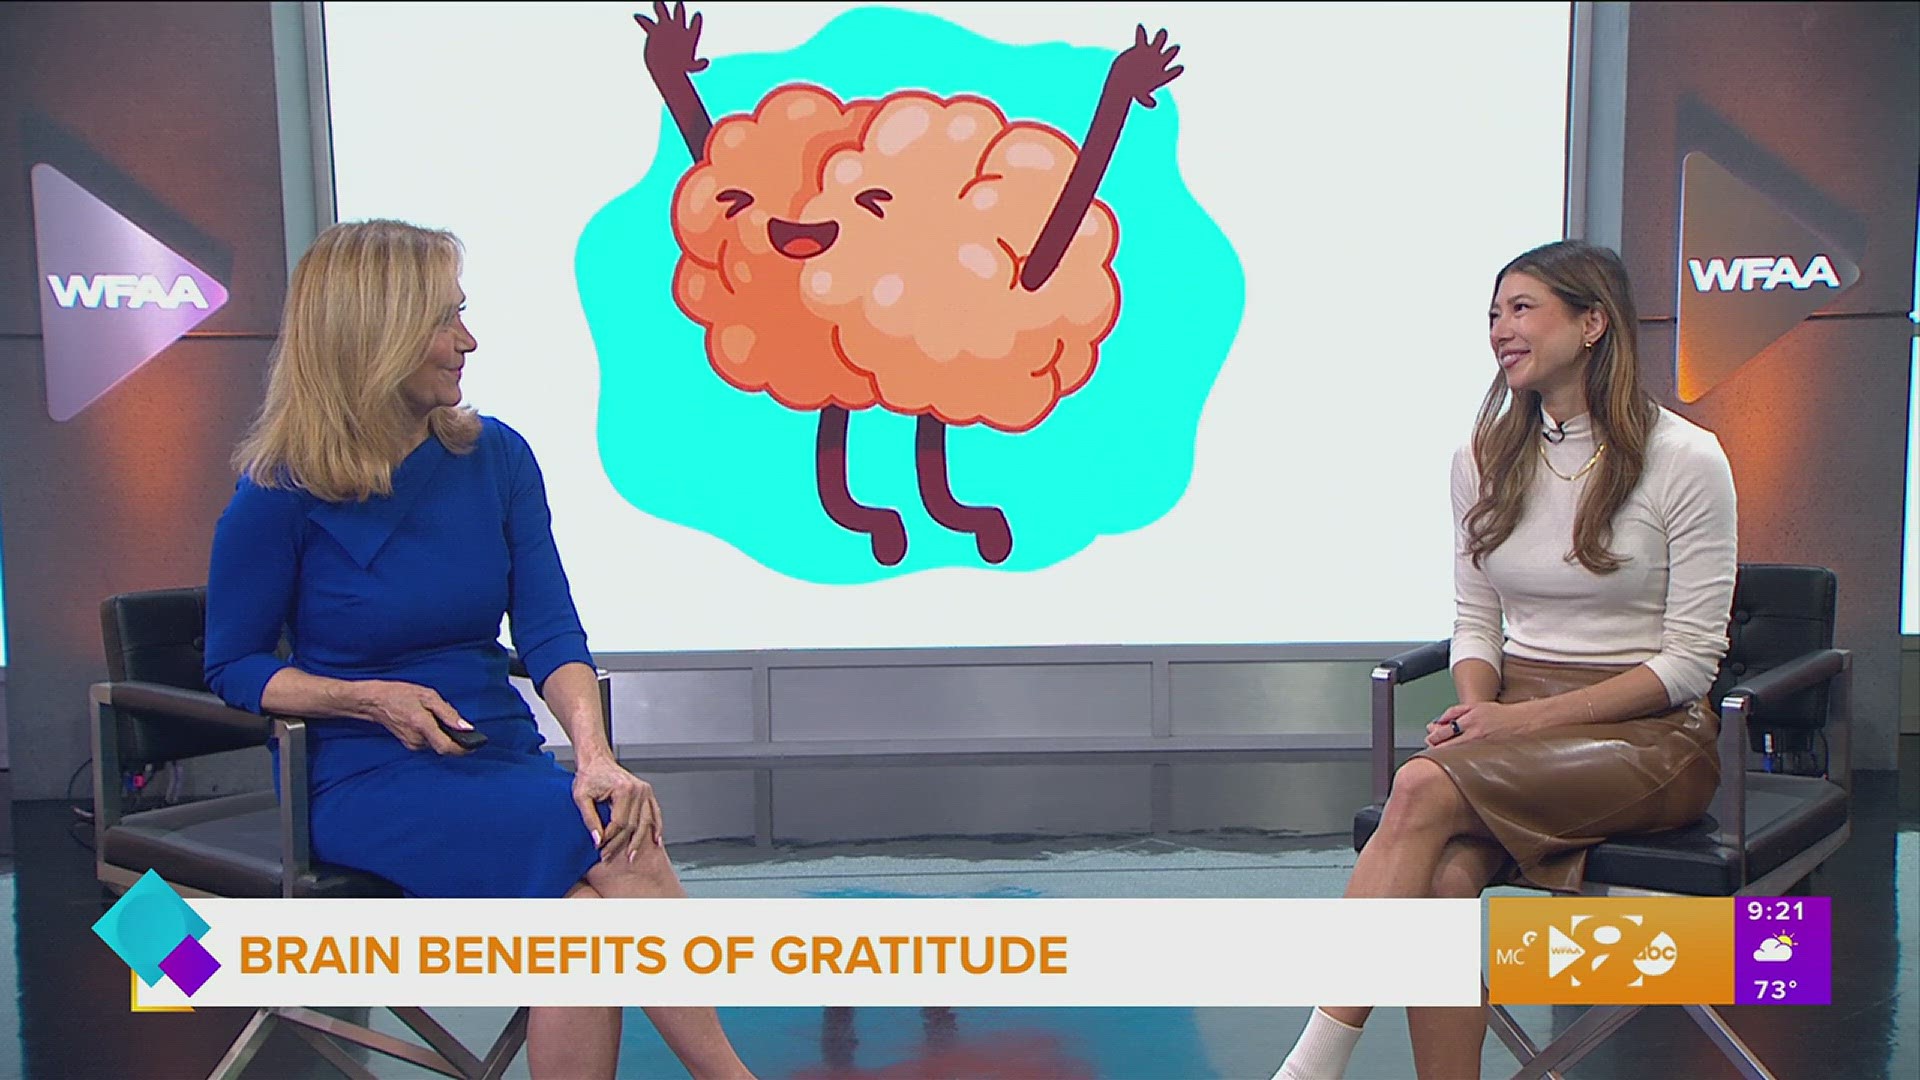 Cognitive Neuroscientist Dr. Julie Fratantoni of the UT Dallas Center for Brain Health explains how practicing gratitude every day benefits the brain